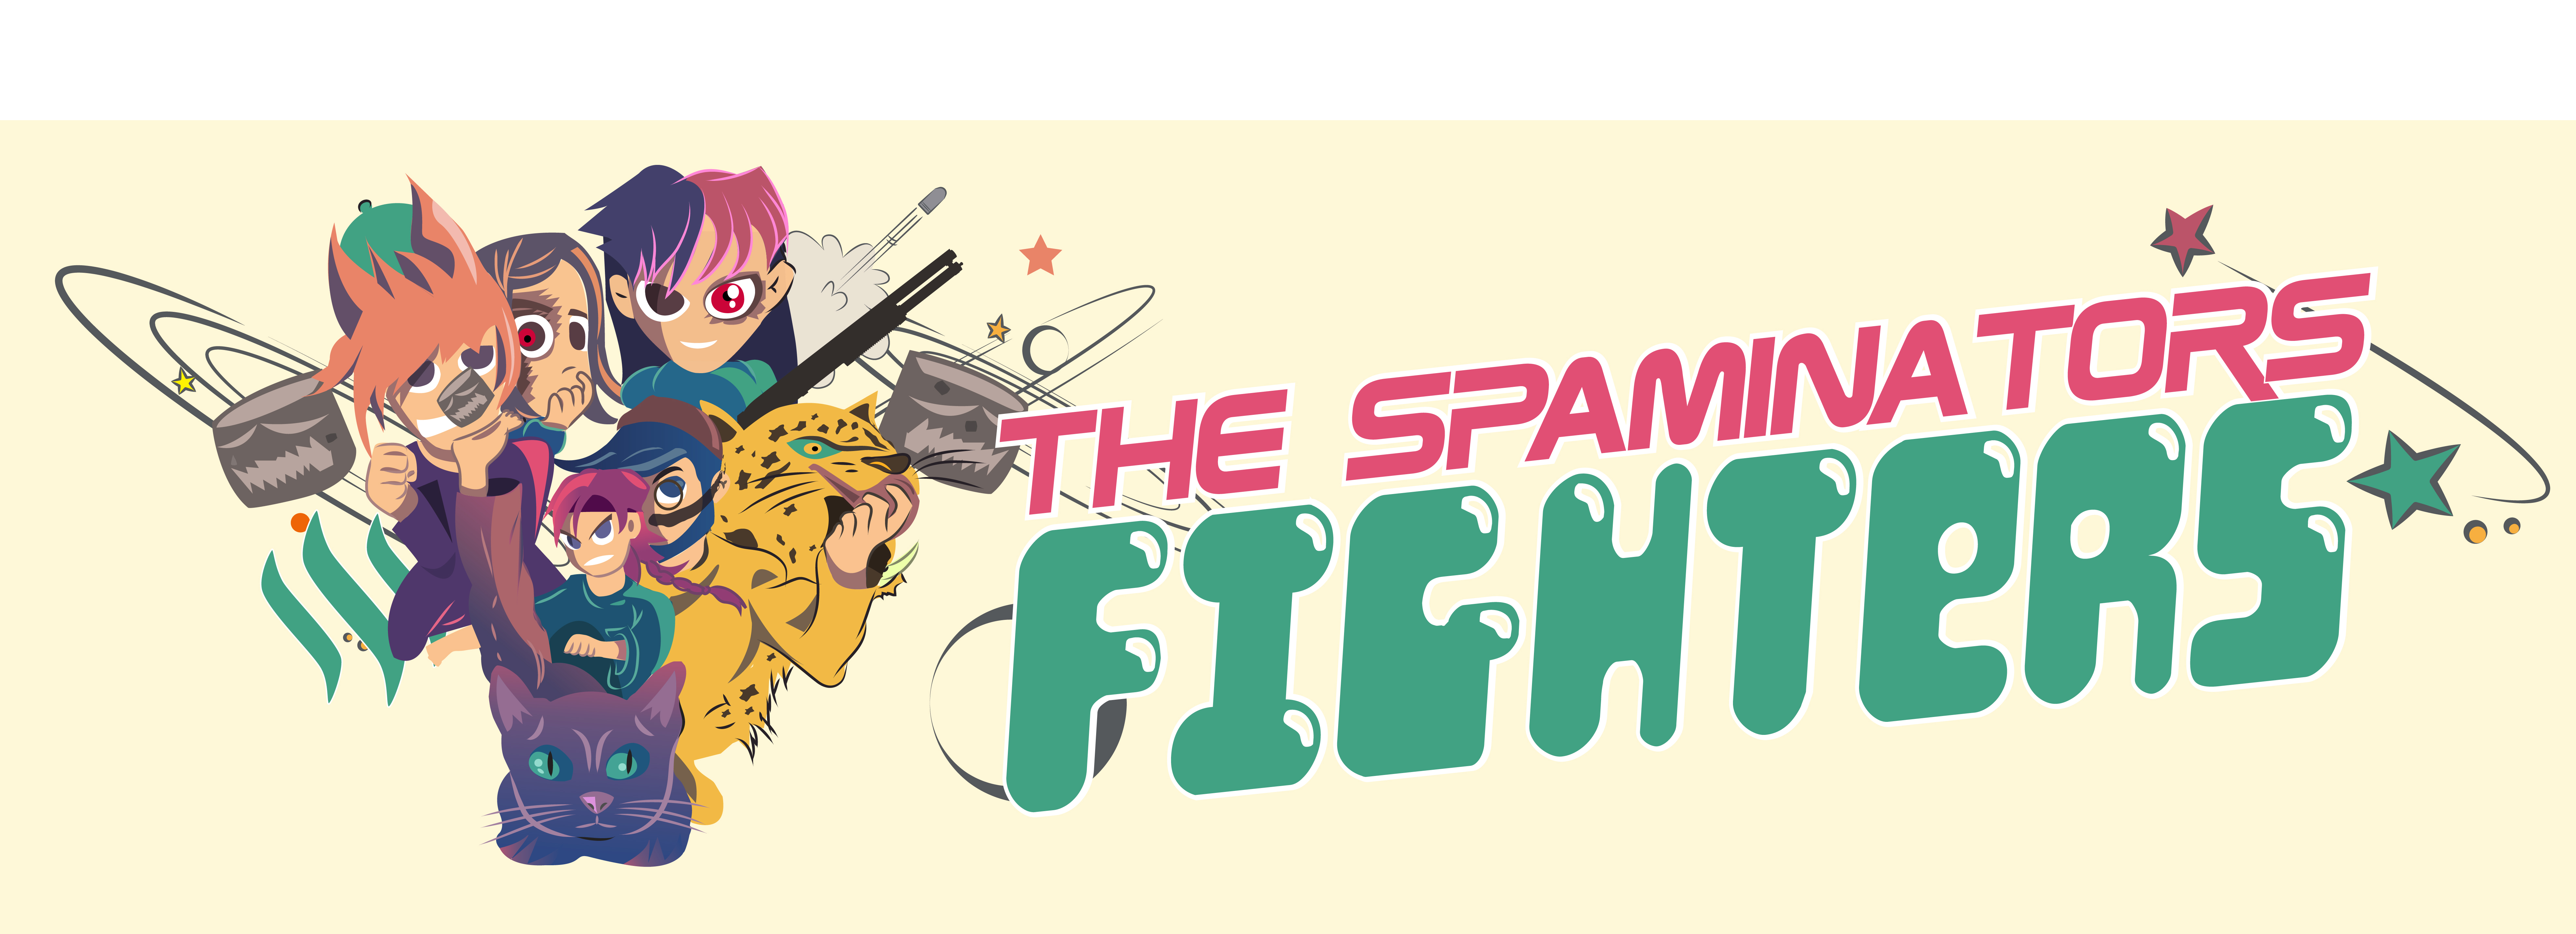 Spaminators Fighters.jpg